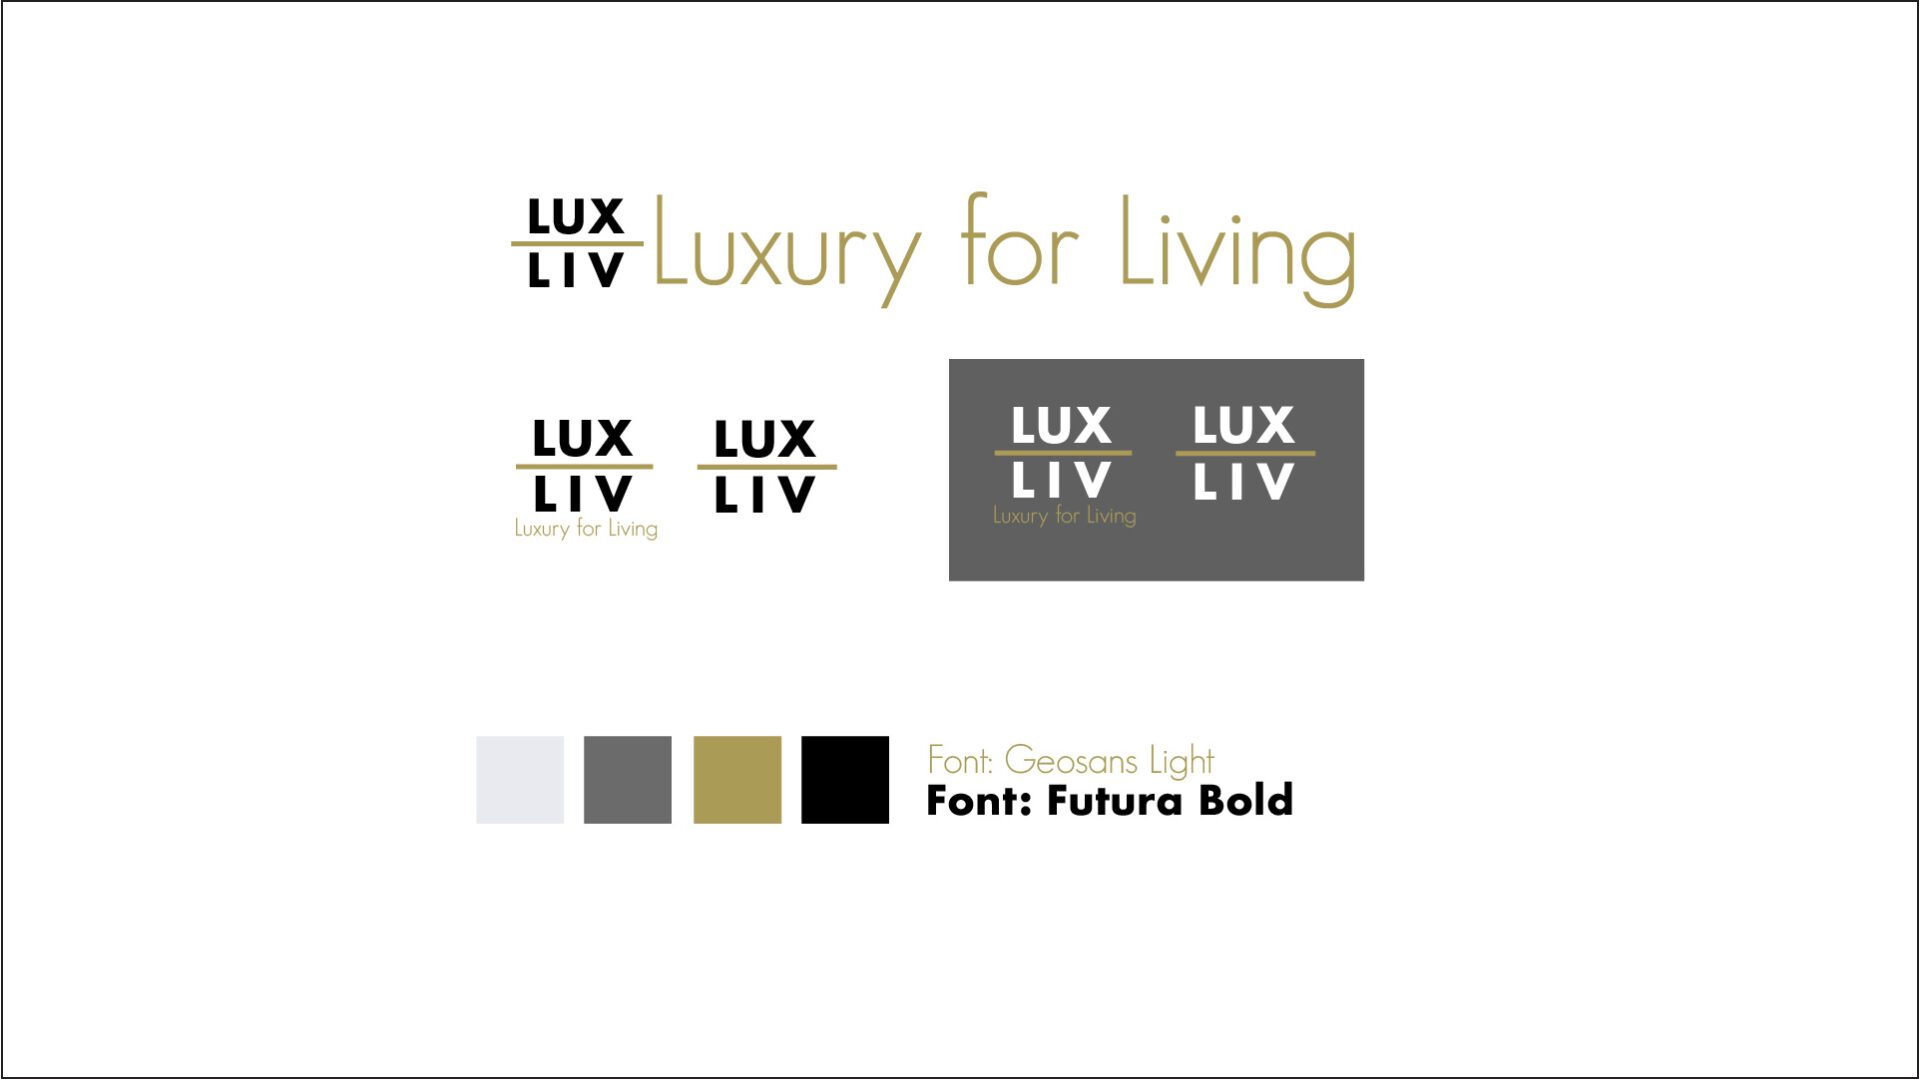 Luxuryforliving.nl logo